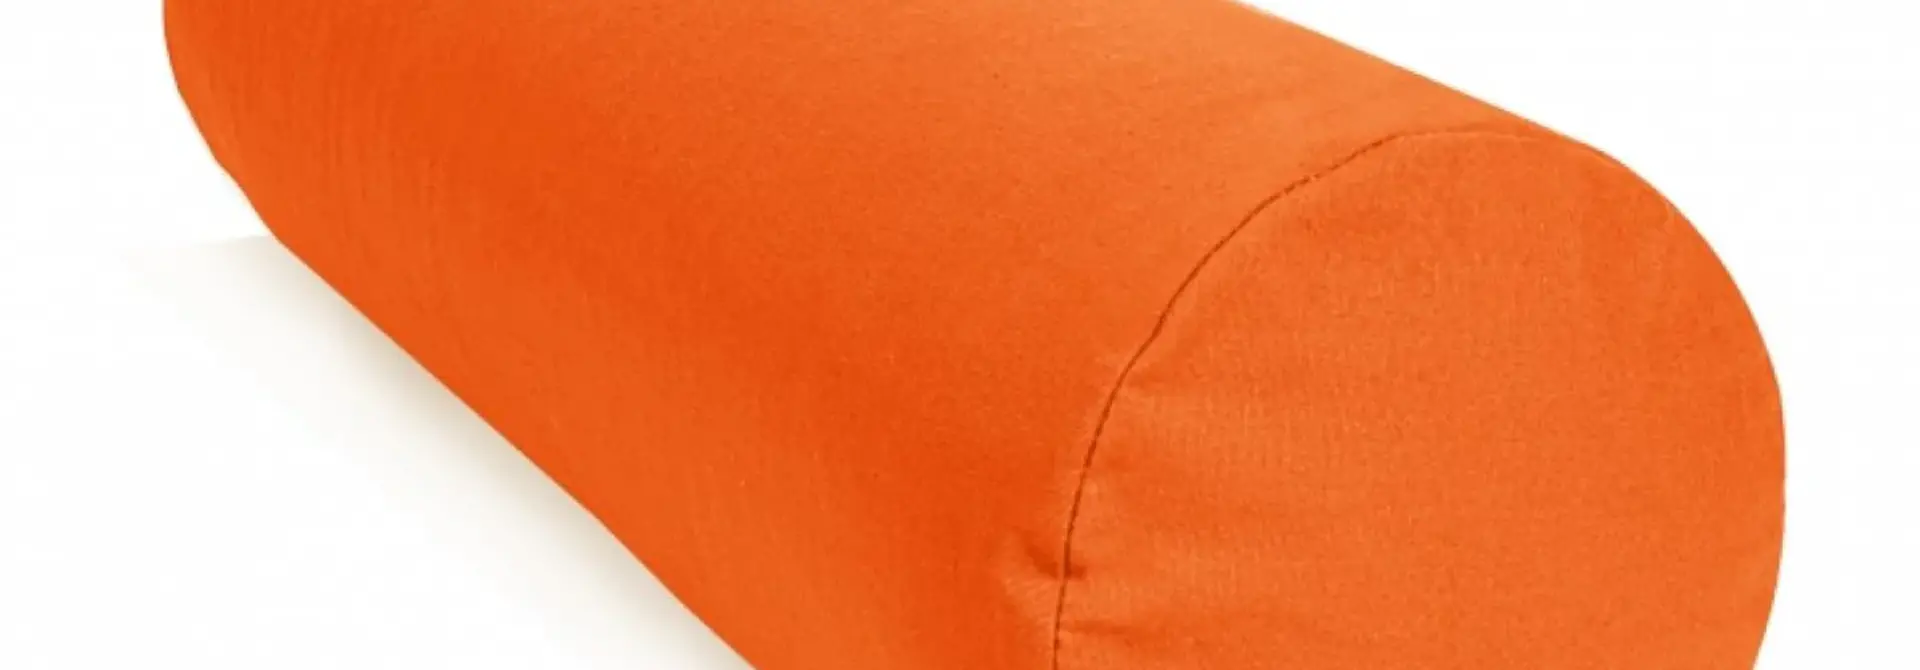 Yoga Bolster Round Buckwheat Deluxe - Orange